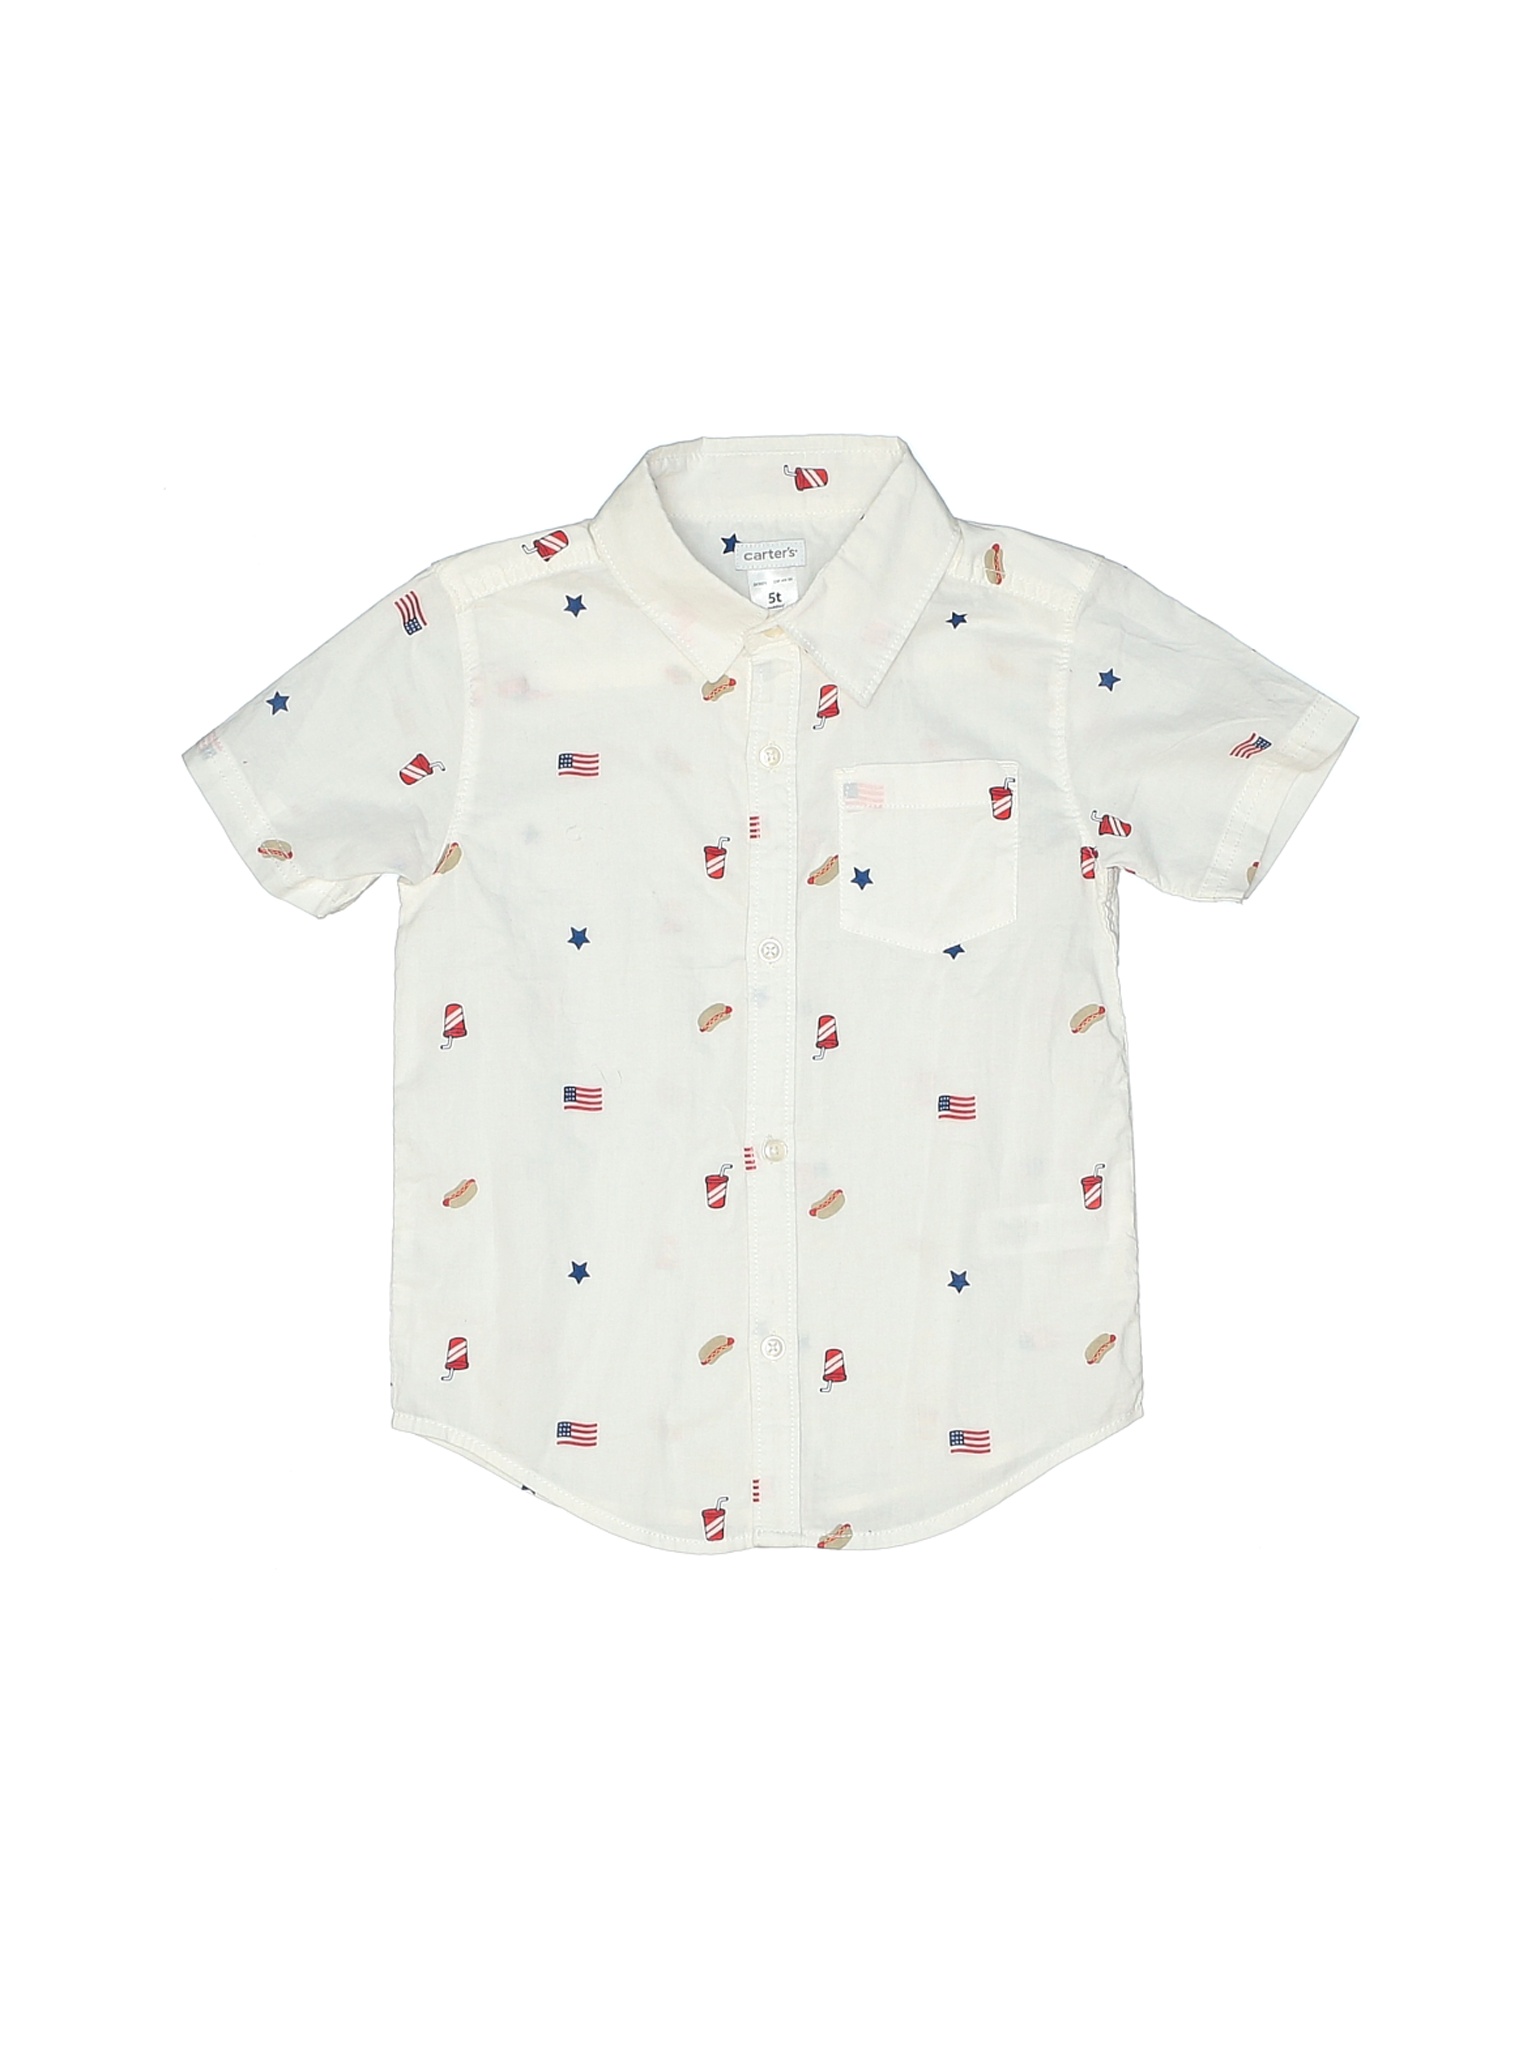 Carter's Boys White Short Sleeve Button-Down Shirt 5T | eBay